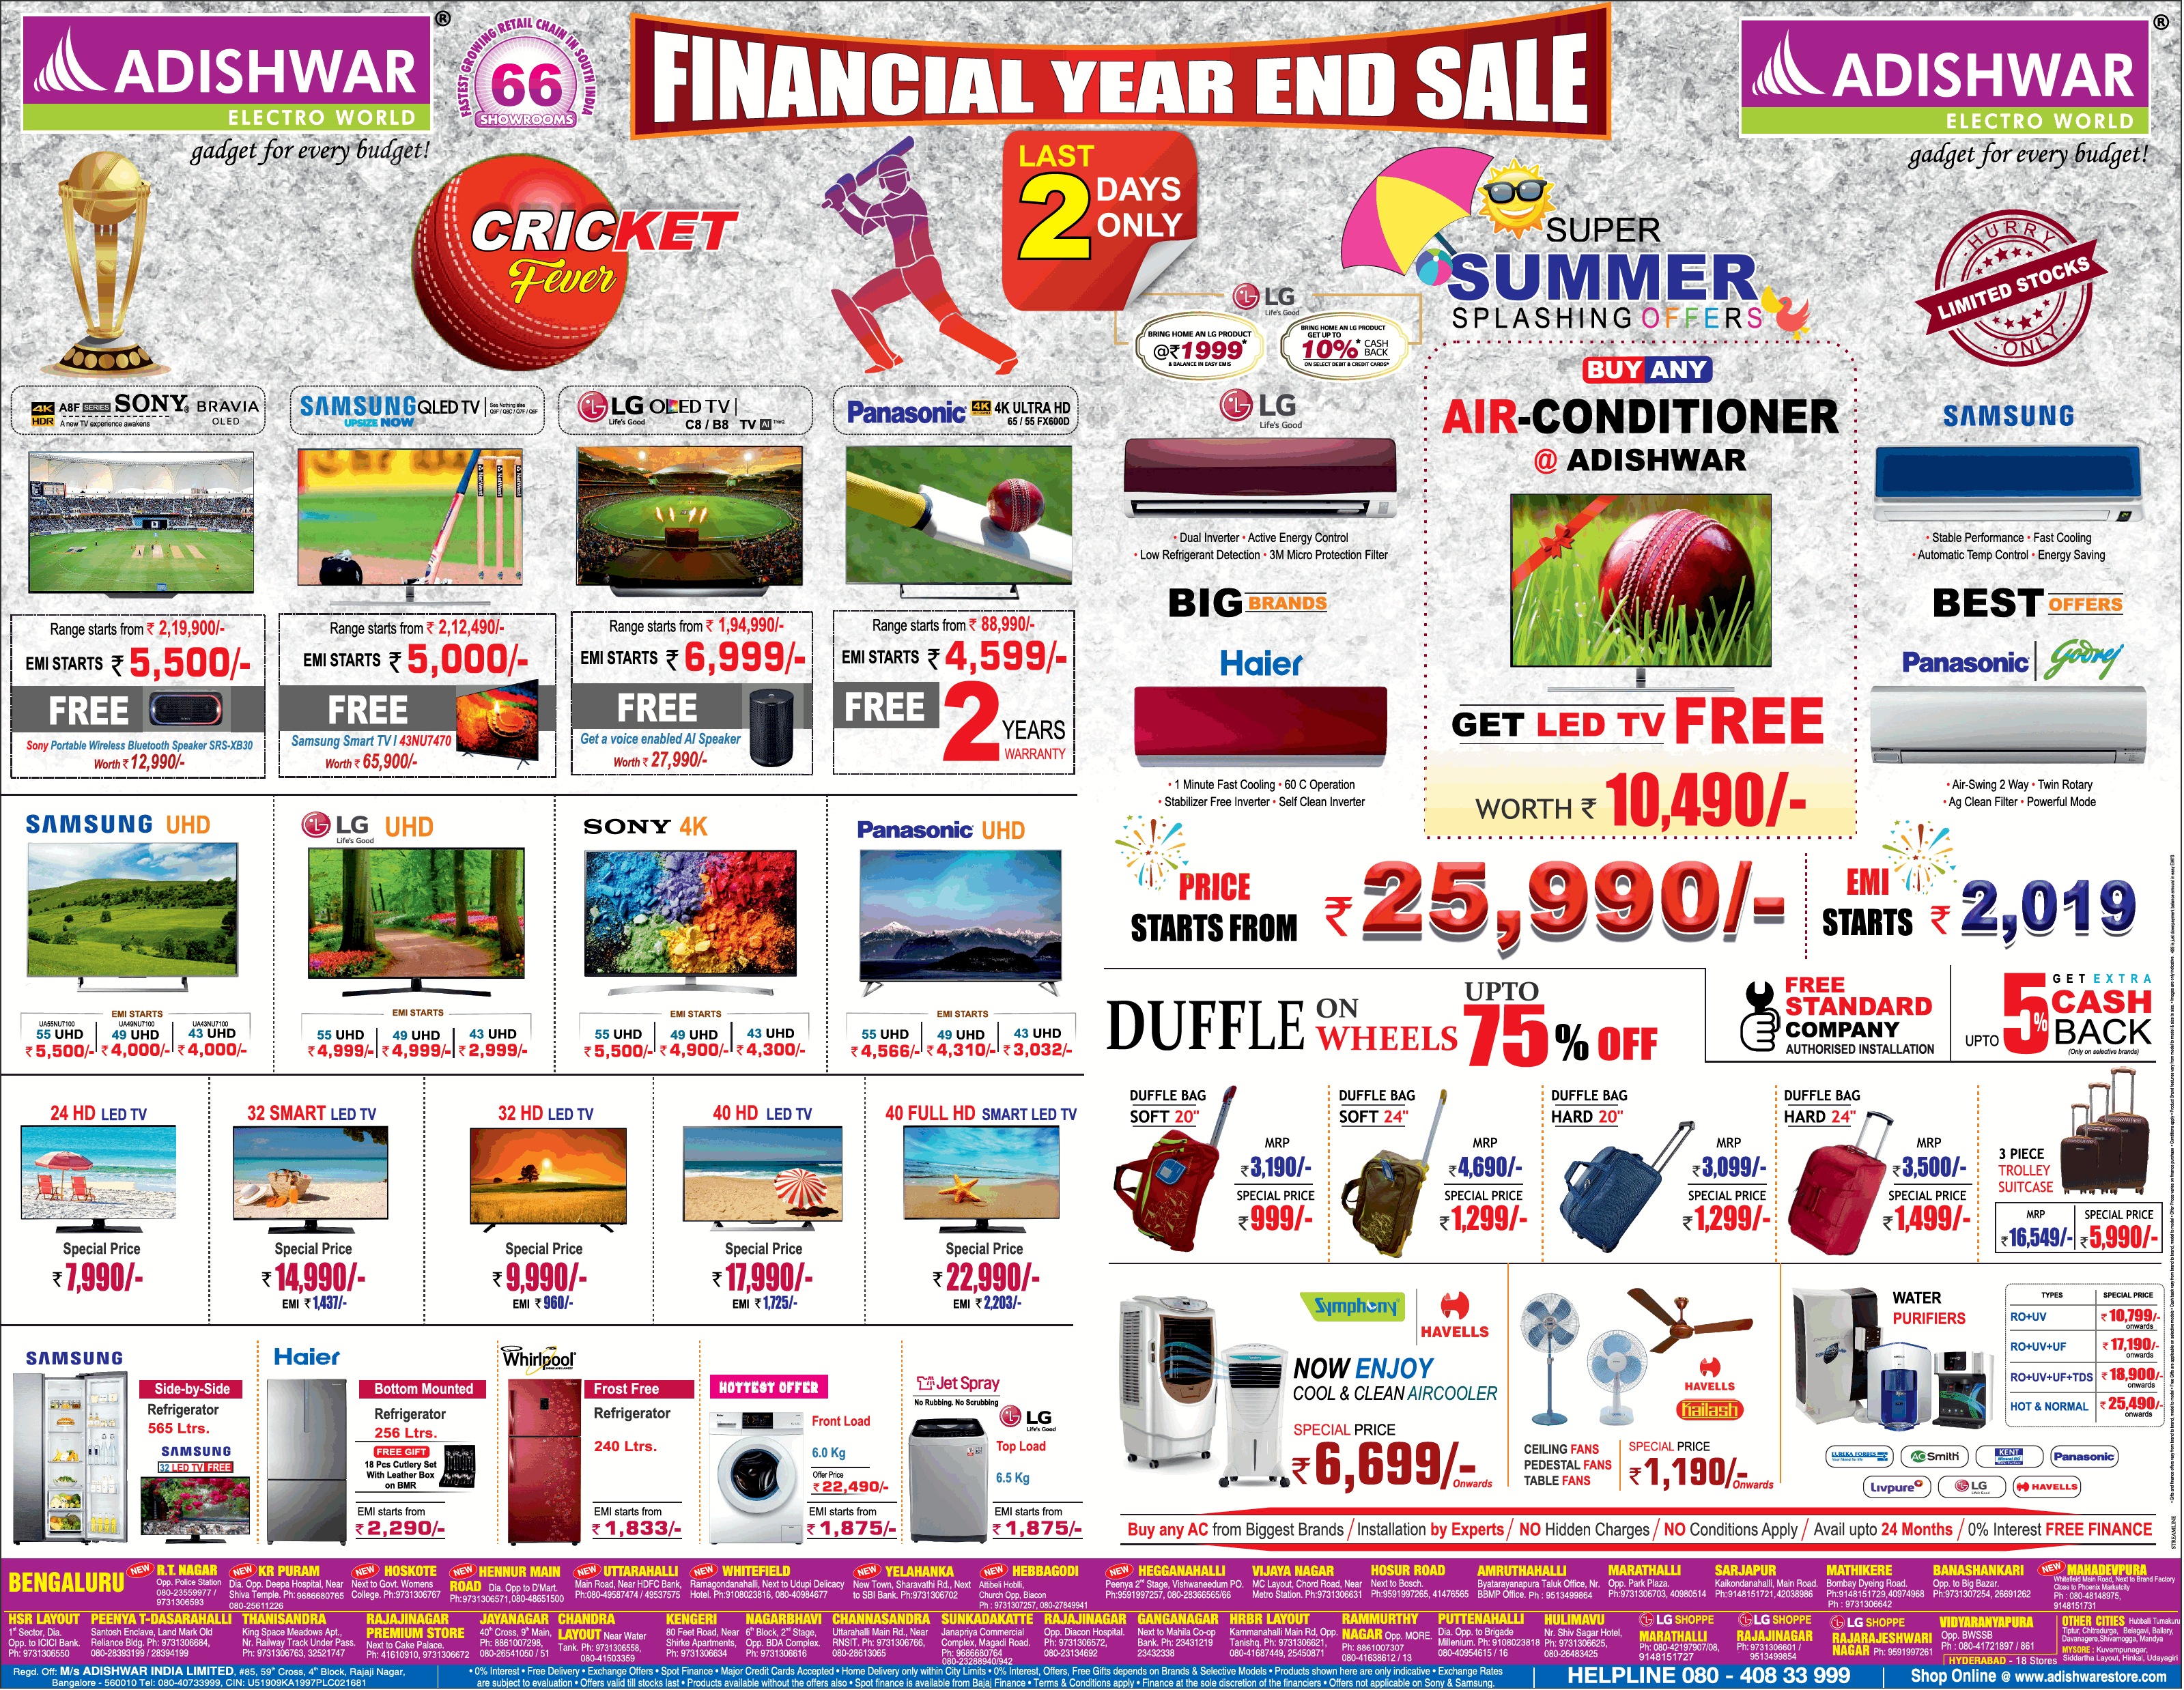 adishwar-financial-year-end-sale-super-summer-splashing-offers-ad-bangalore-times-30-03-2019.png